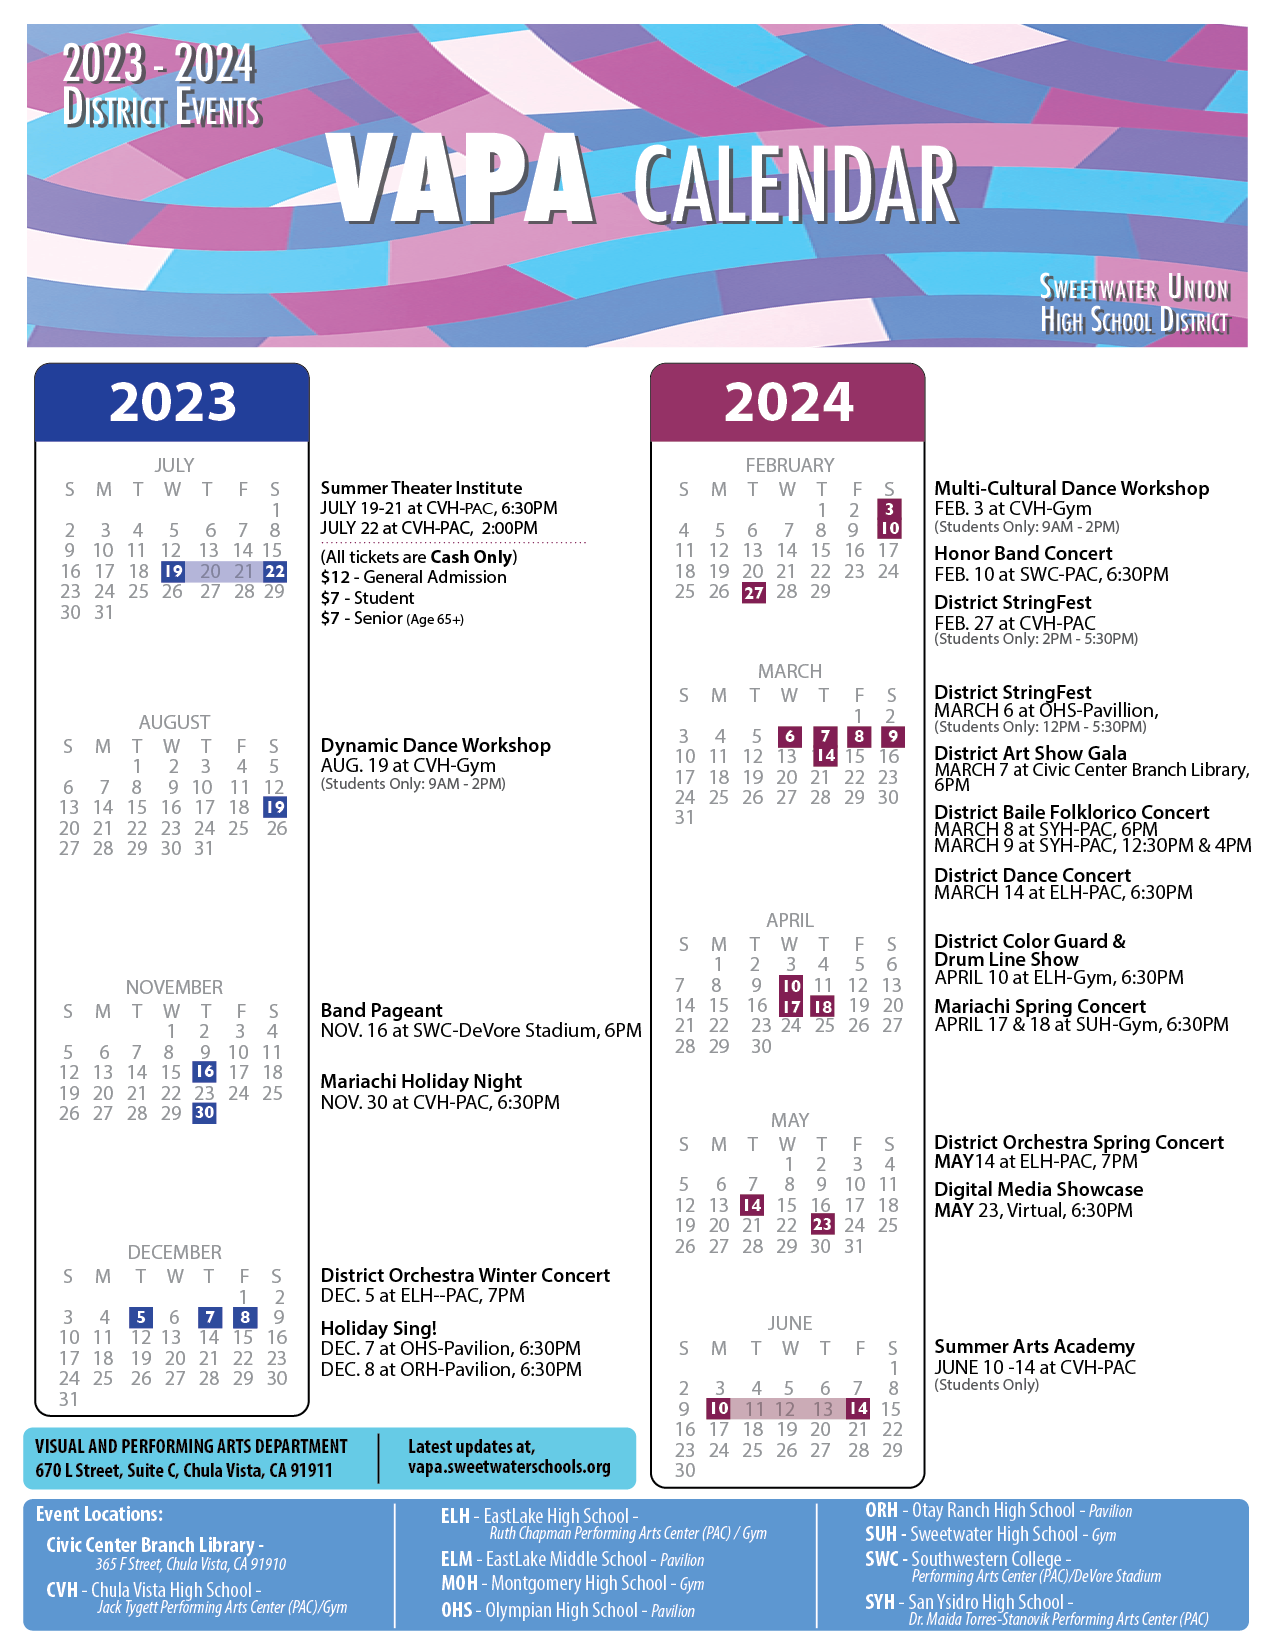 VAPA Calendar 2023-2024